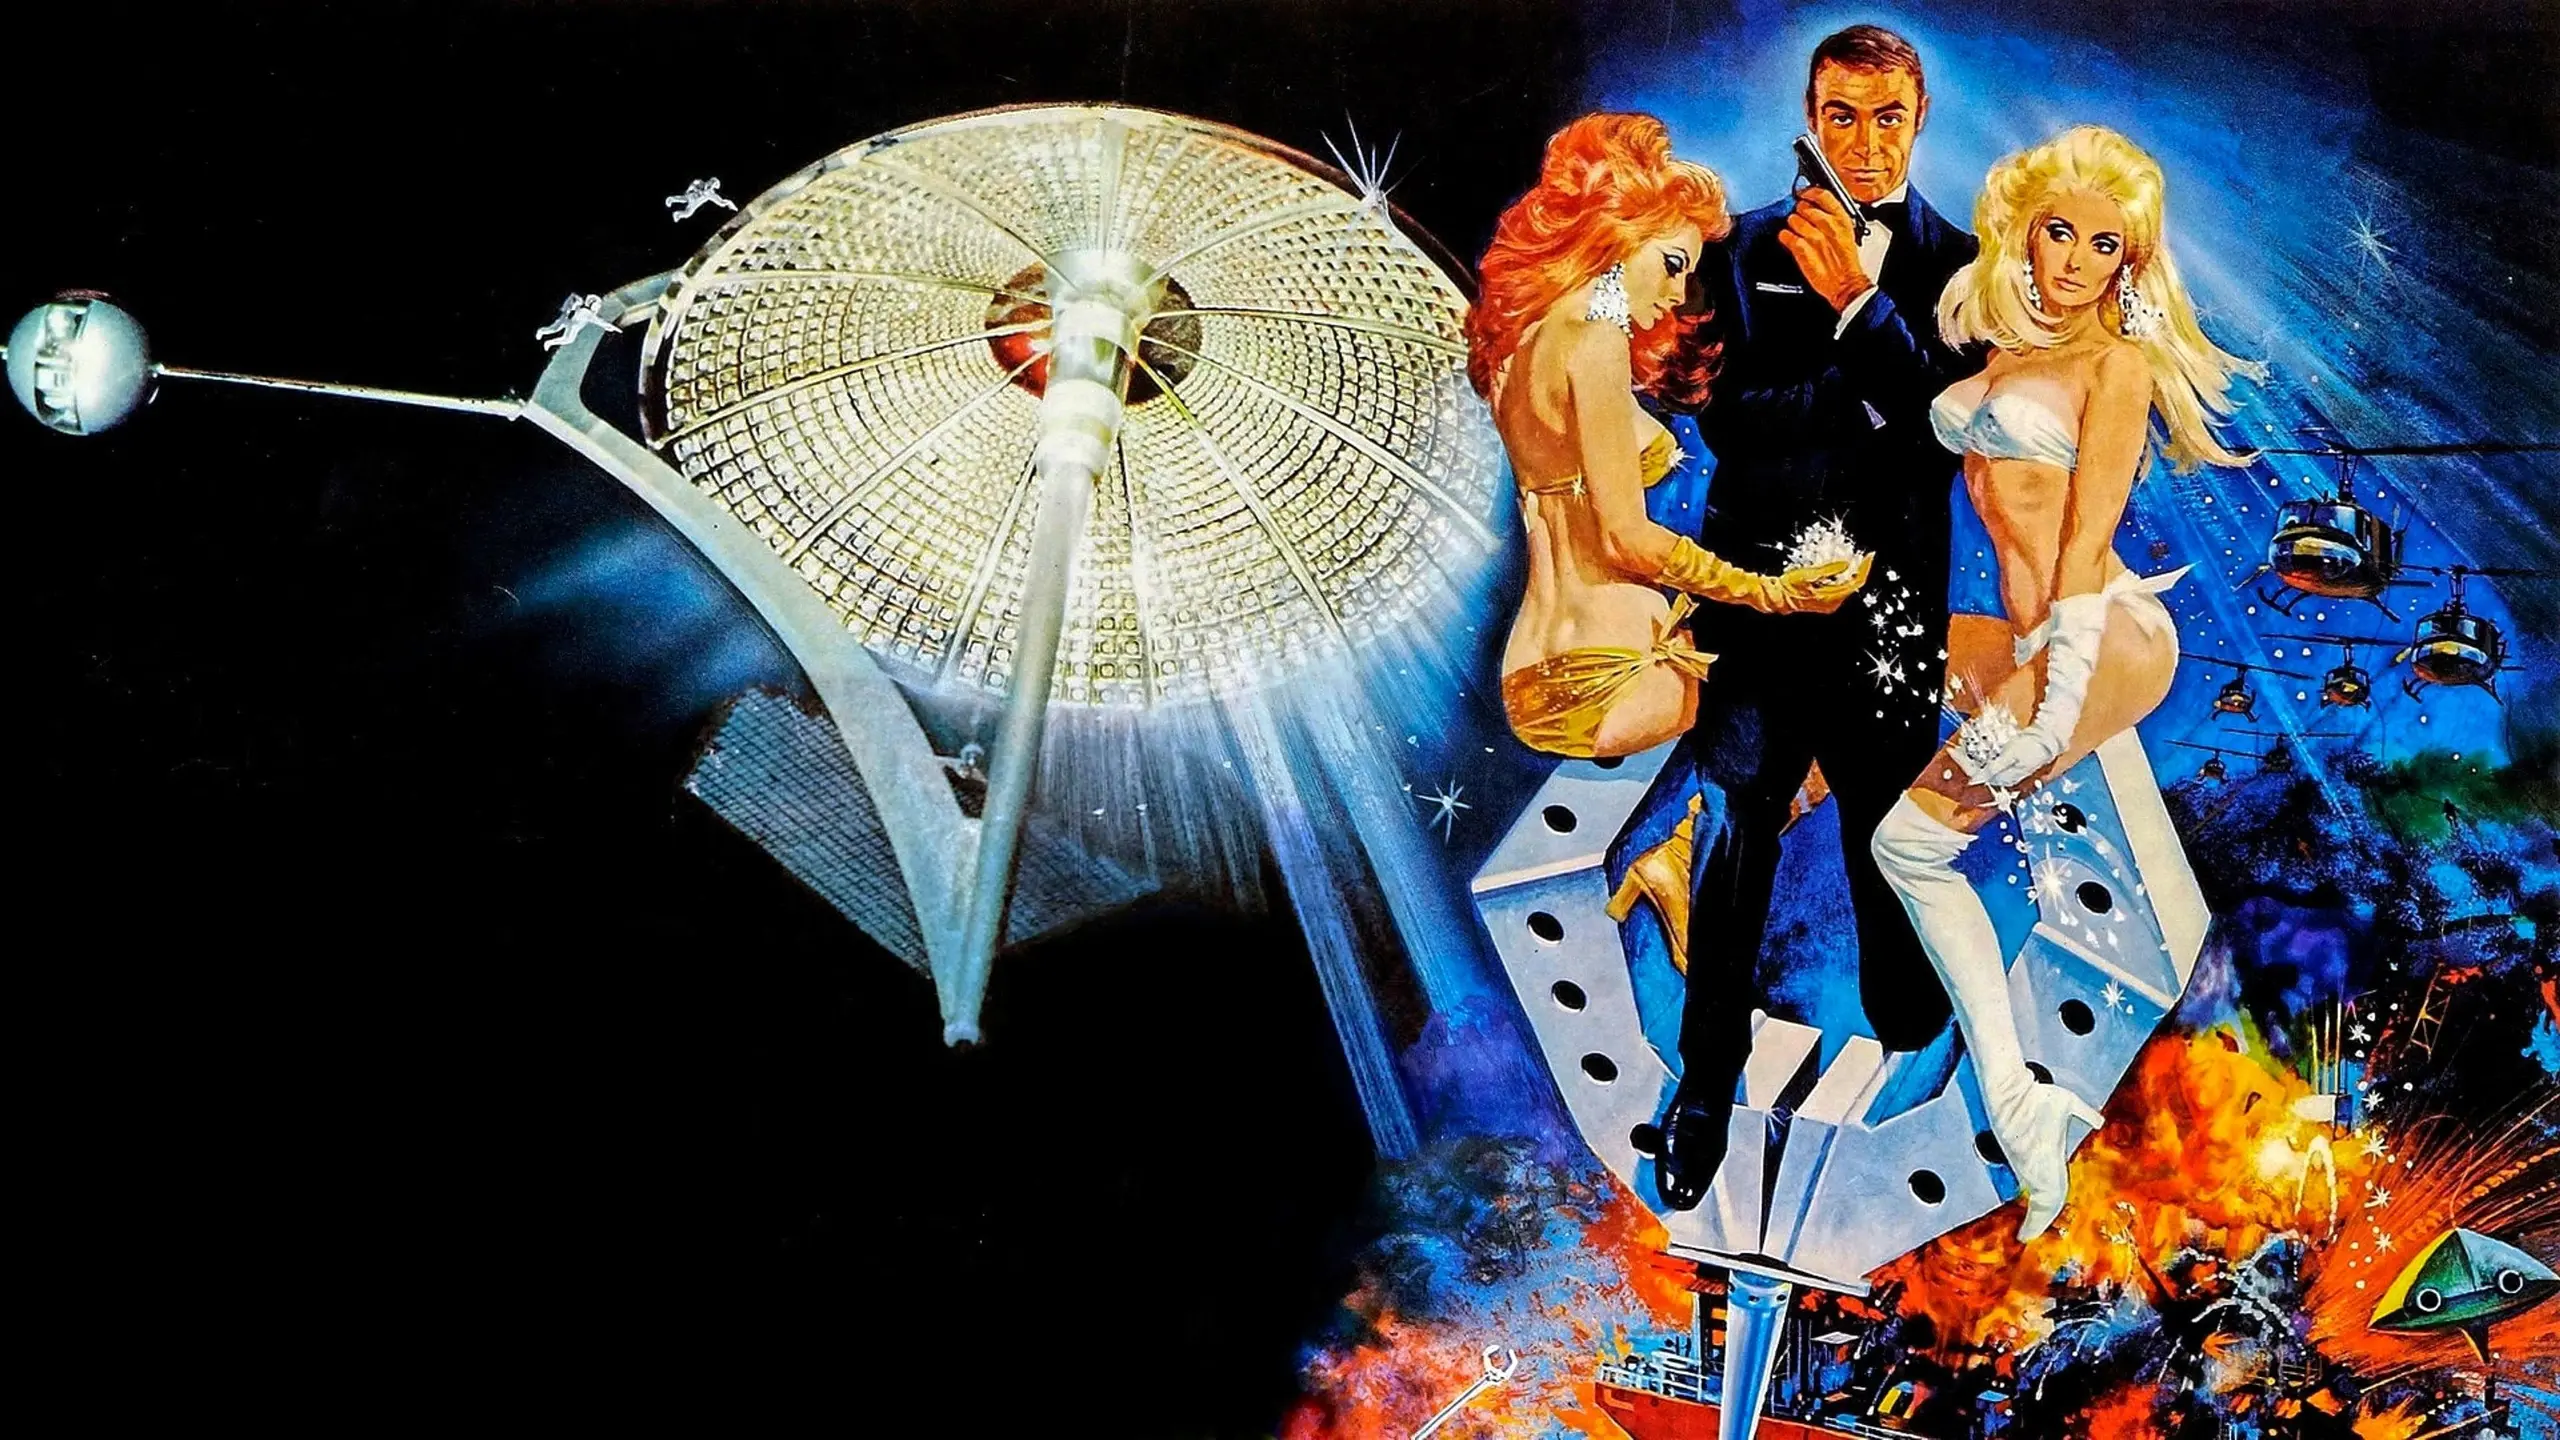 James Bond 007 – Diamantenfieber